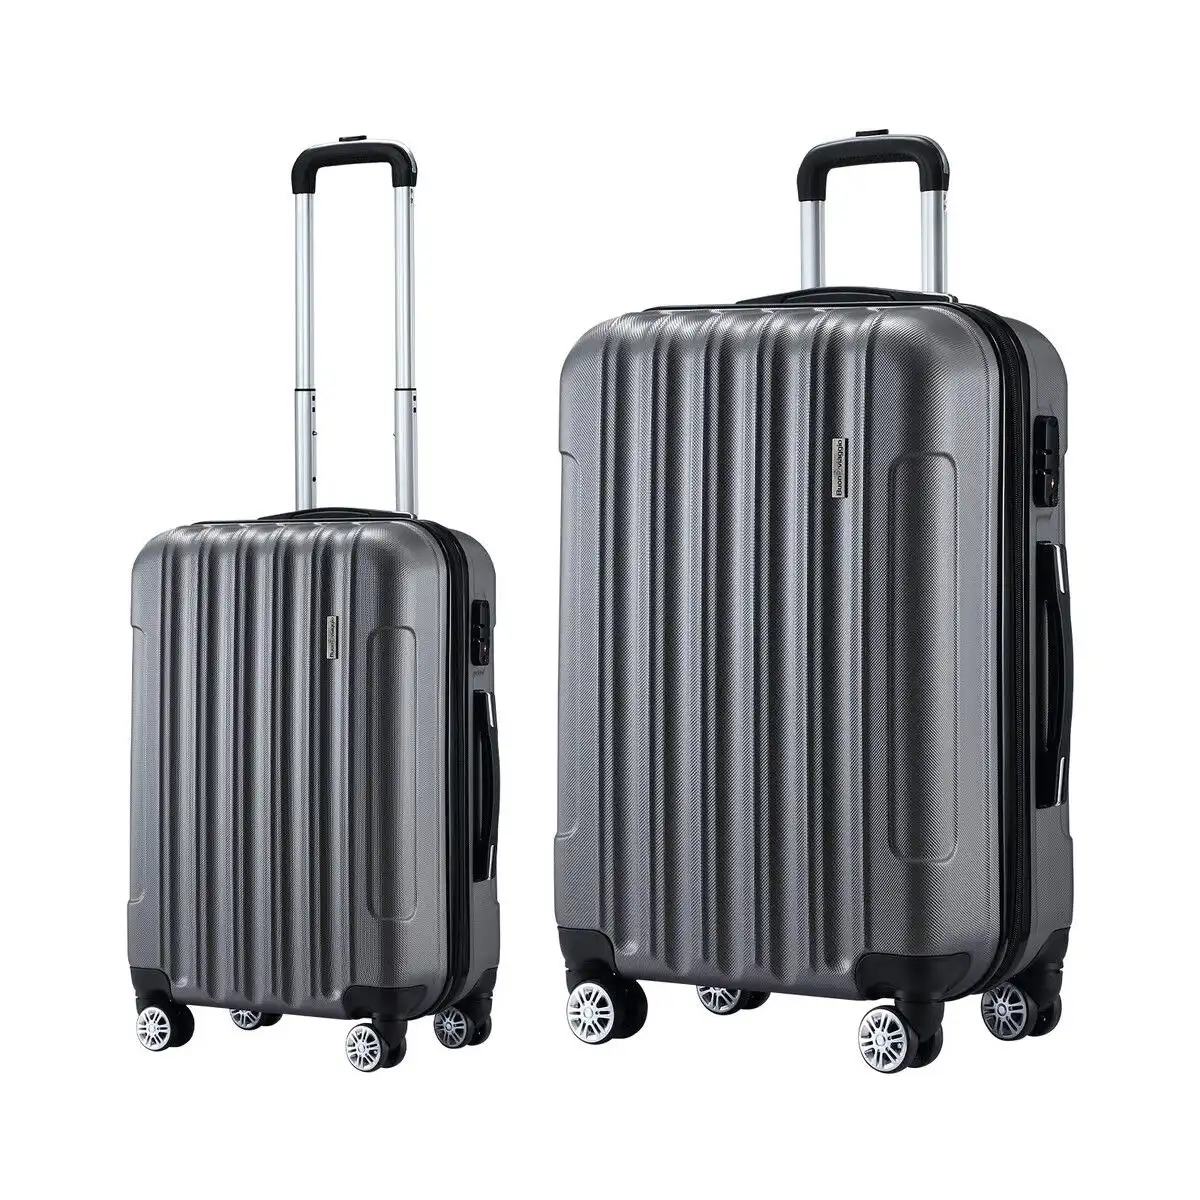 Buon Viaggio 2 PCS Luggage Set Travel Hard Suitcases Carry On Lightweight Rolling Trolley TSA Lock Dark Grey